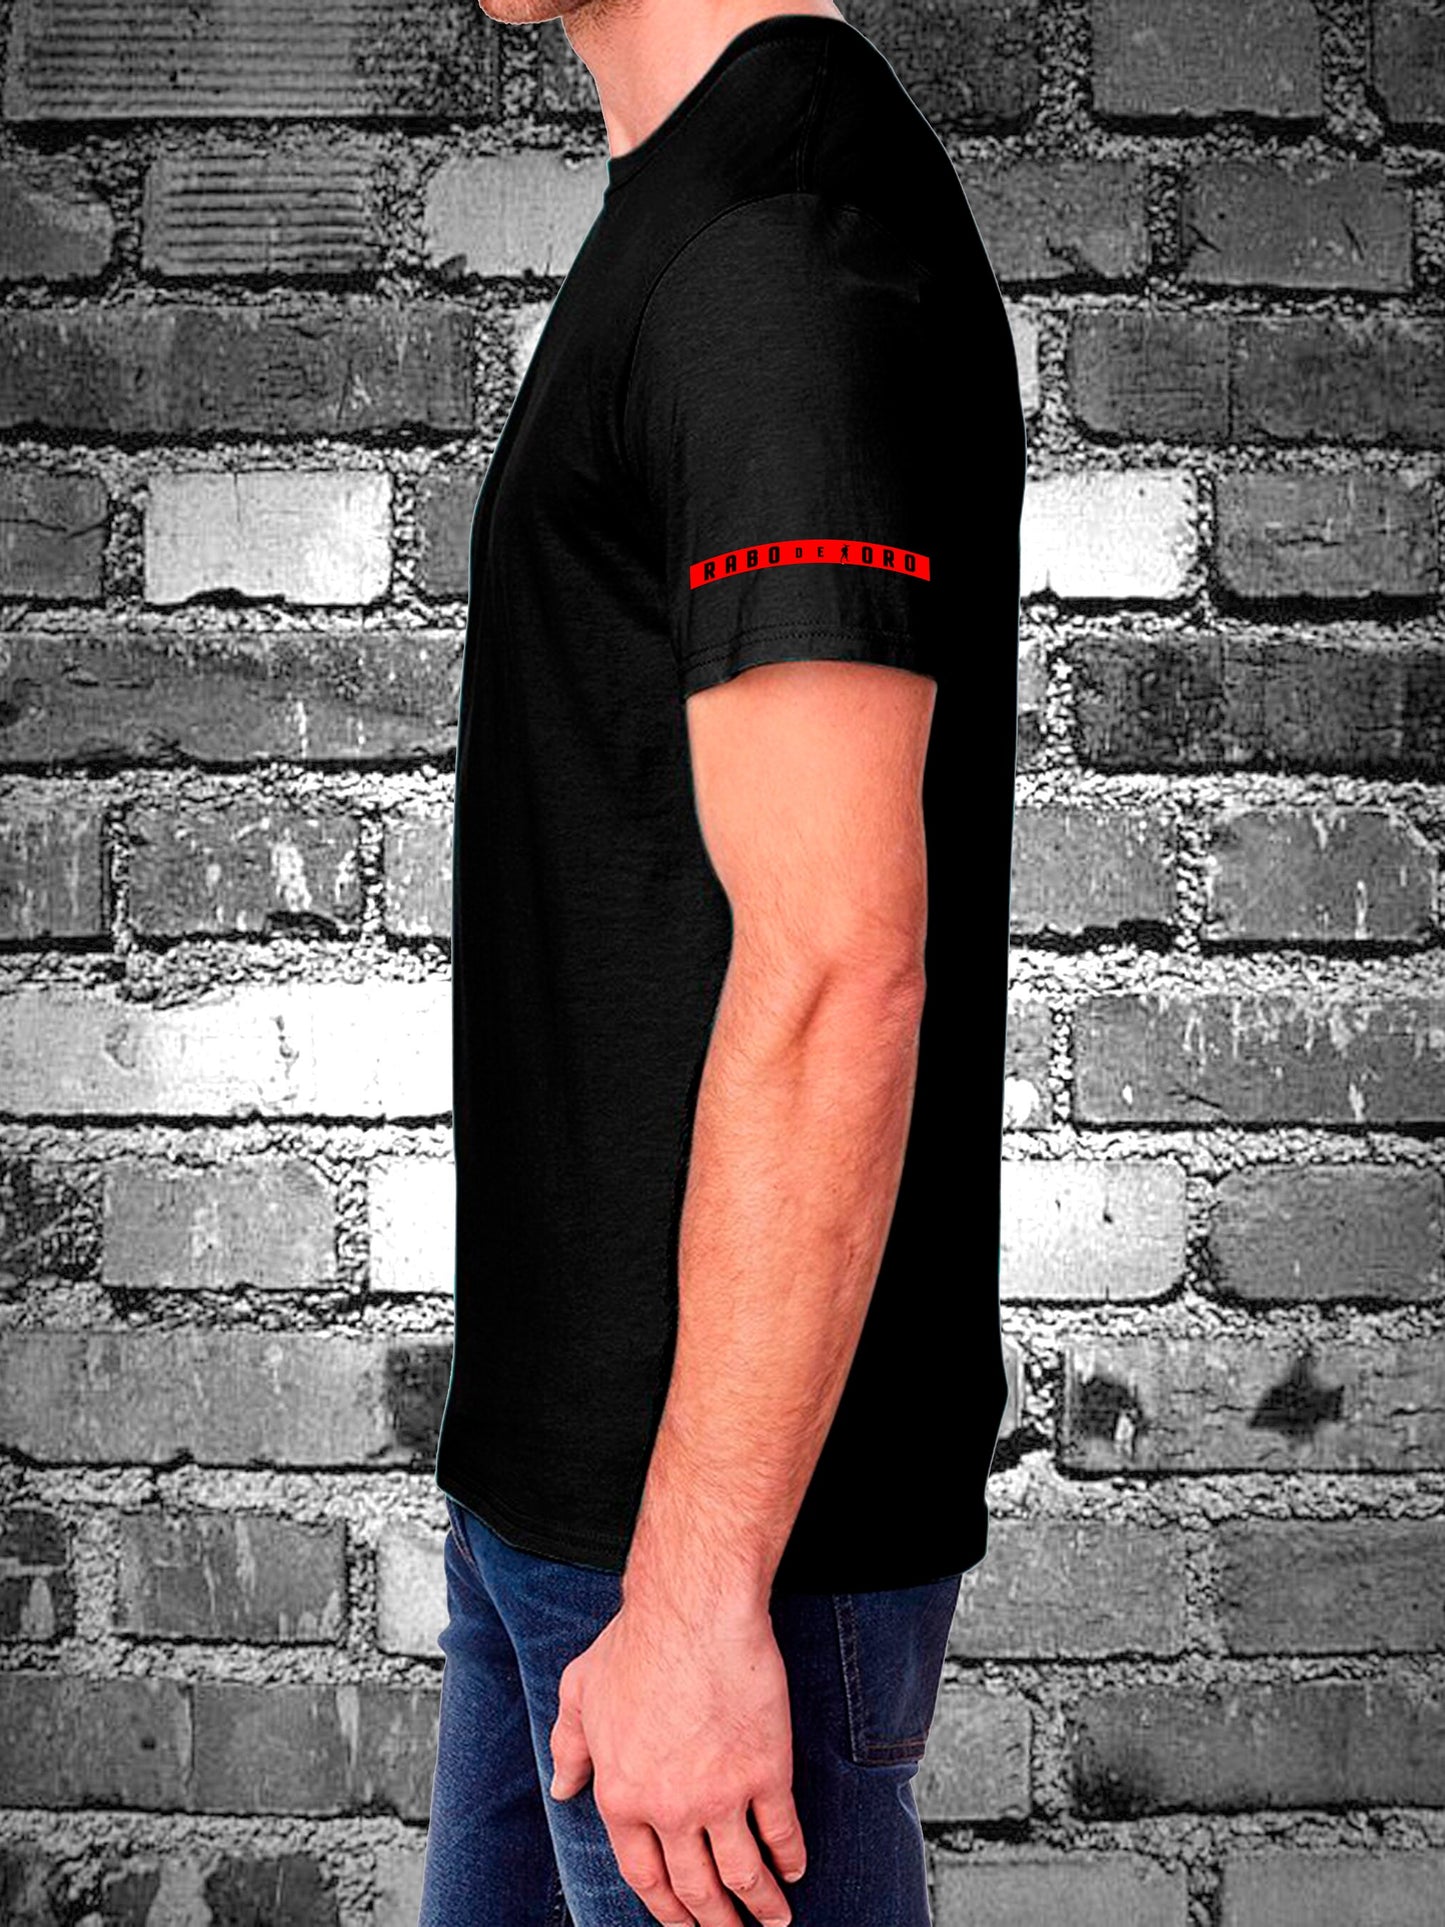 SLAVE Black T-Shirt with BDSM Hanky Code details